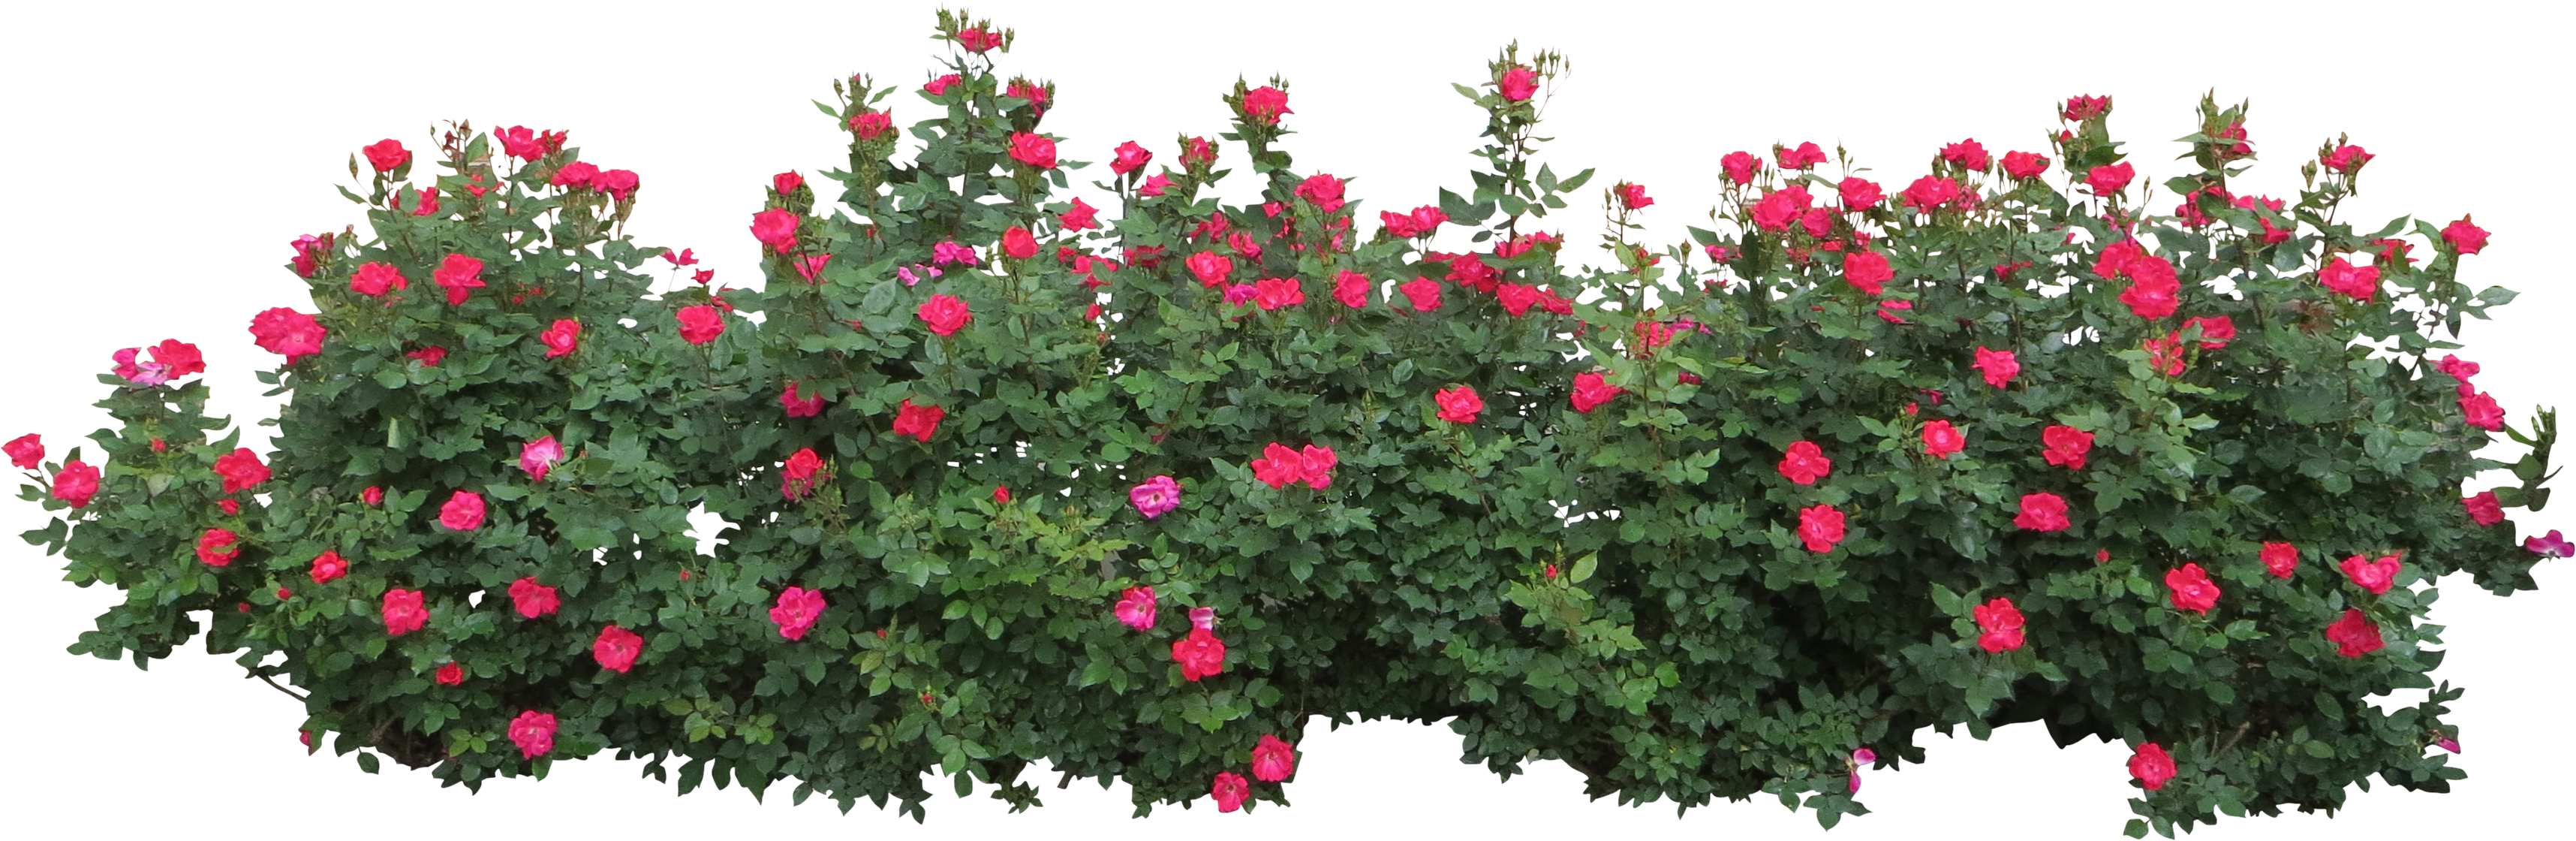 Free Flower Bush Cliparts, Download Free Flower Bush Cliparts png